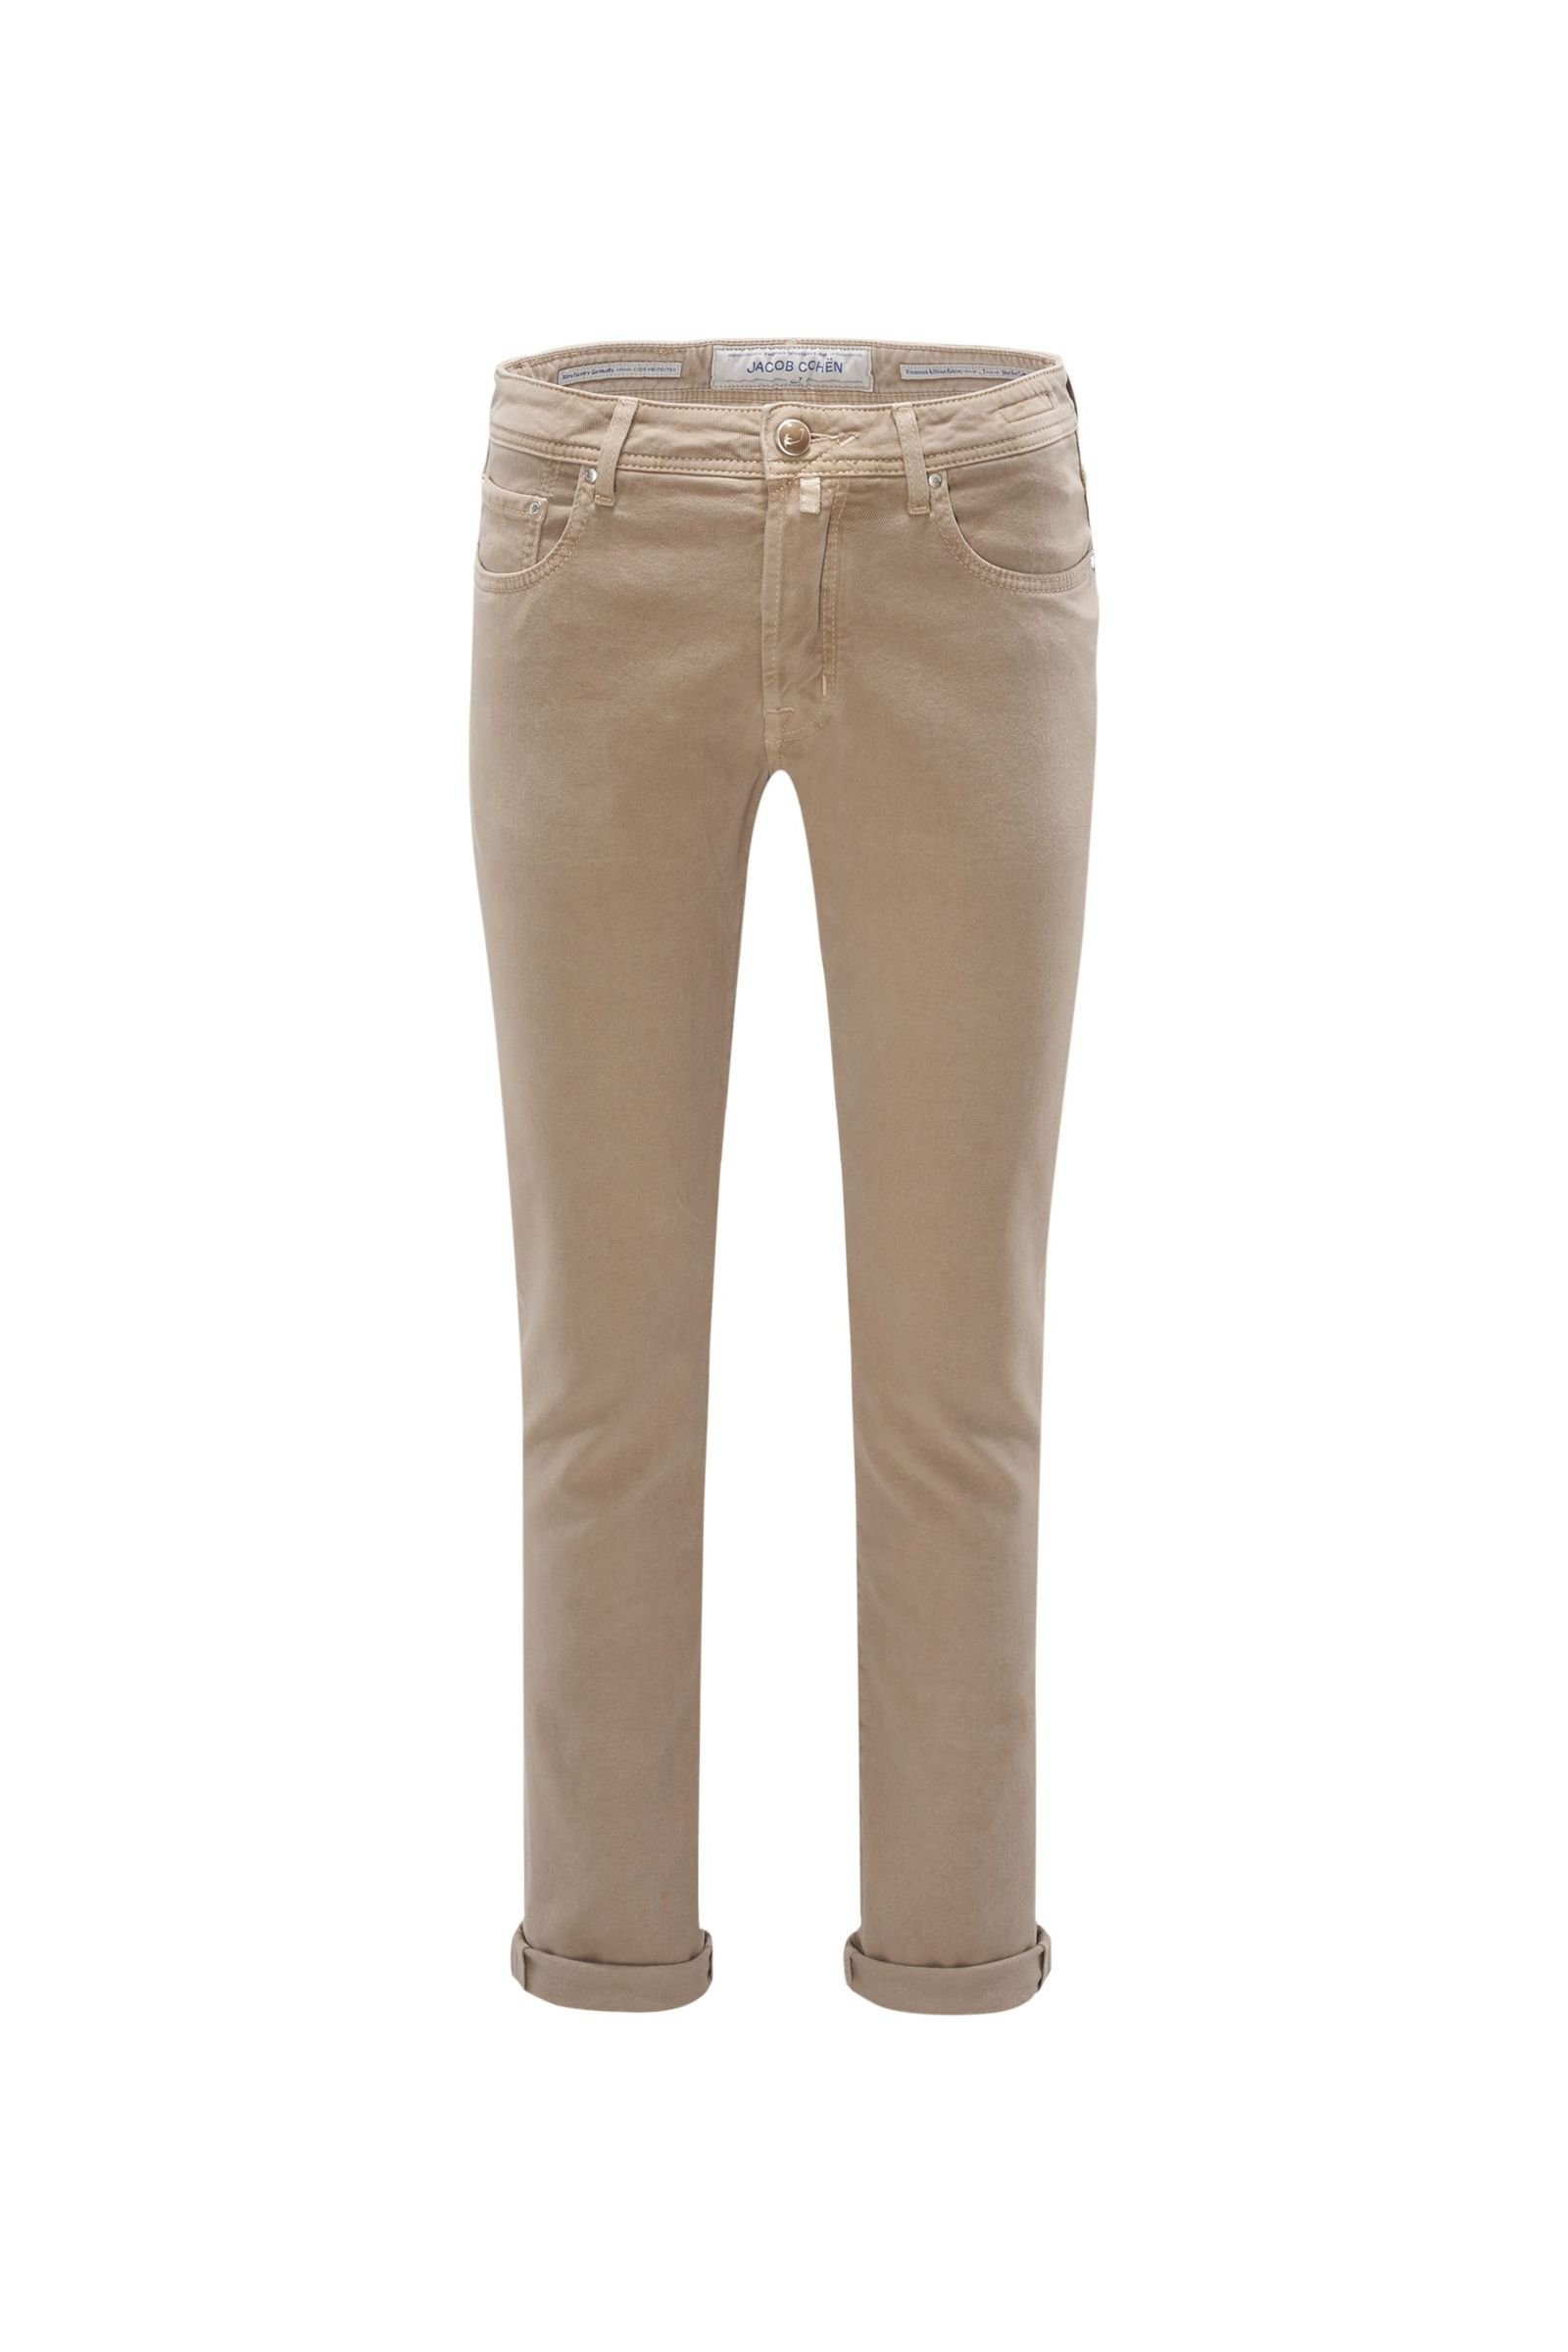 Cotton trousers 'J688 Comfort Slim Fit' light brown